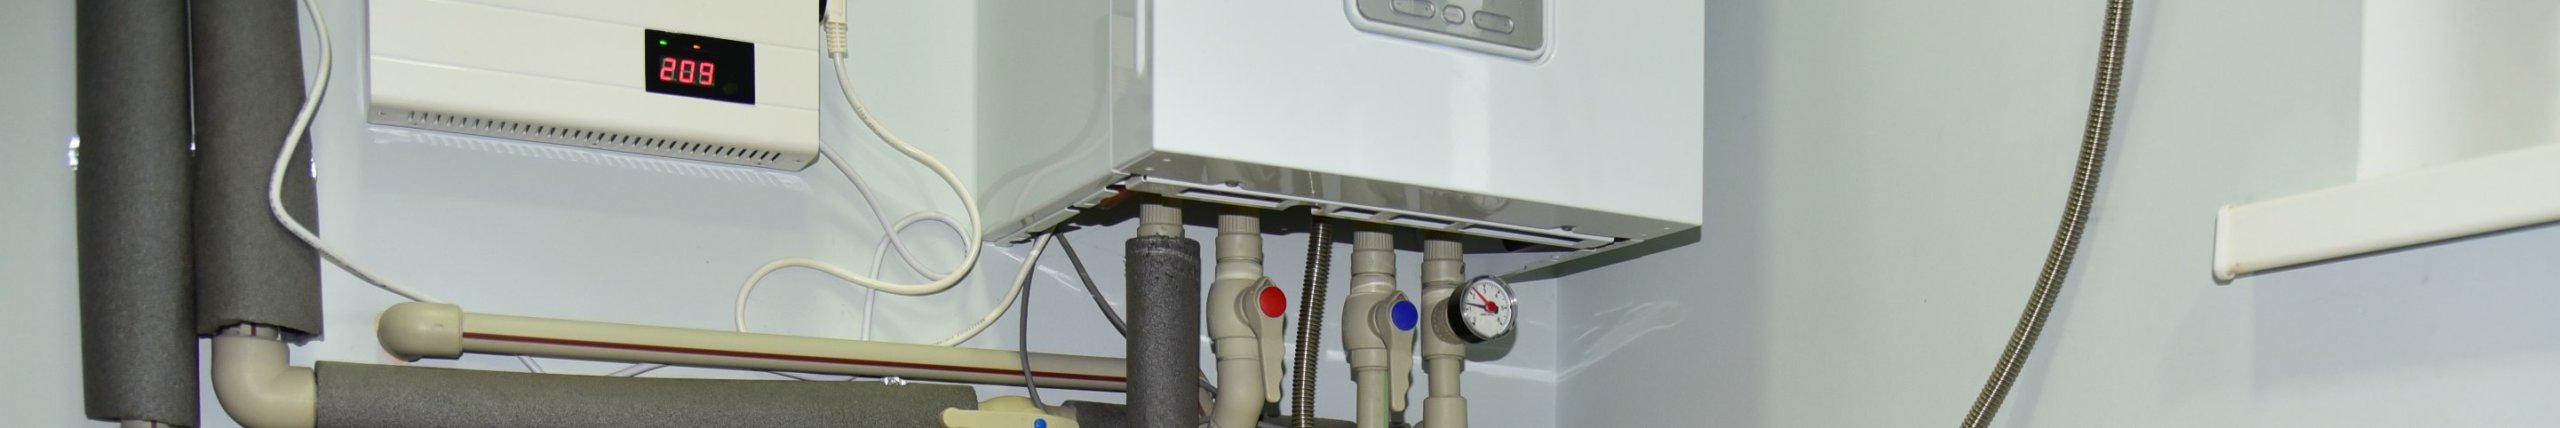 Heating Equipment Seasonal Checkup Page Header decorative image